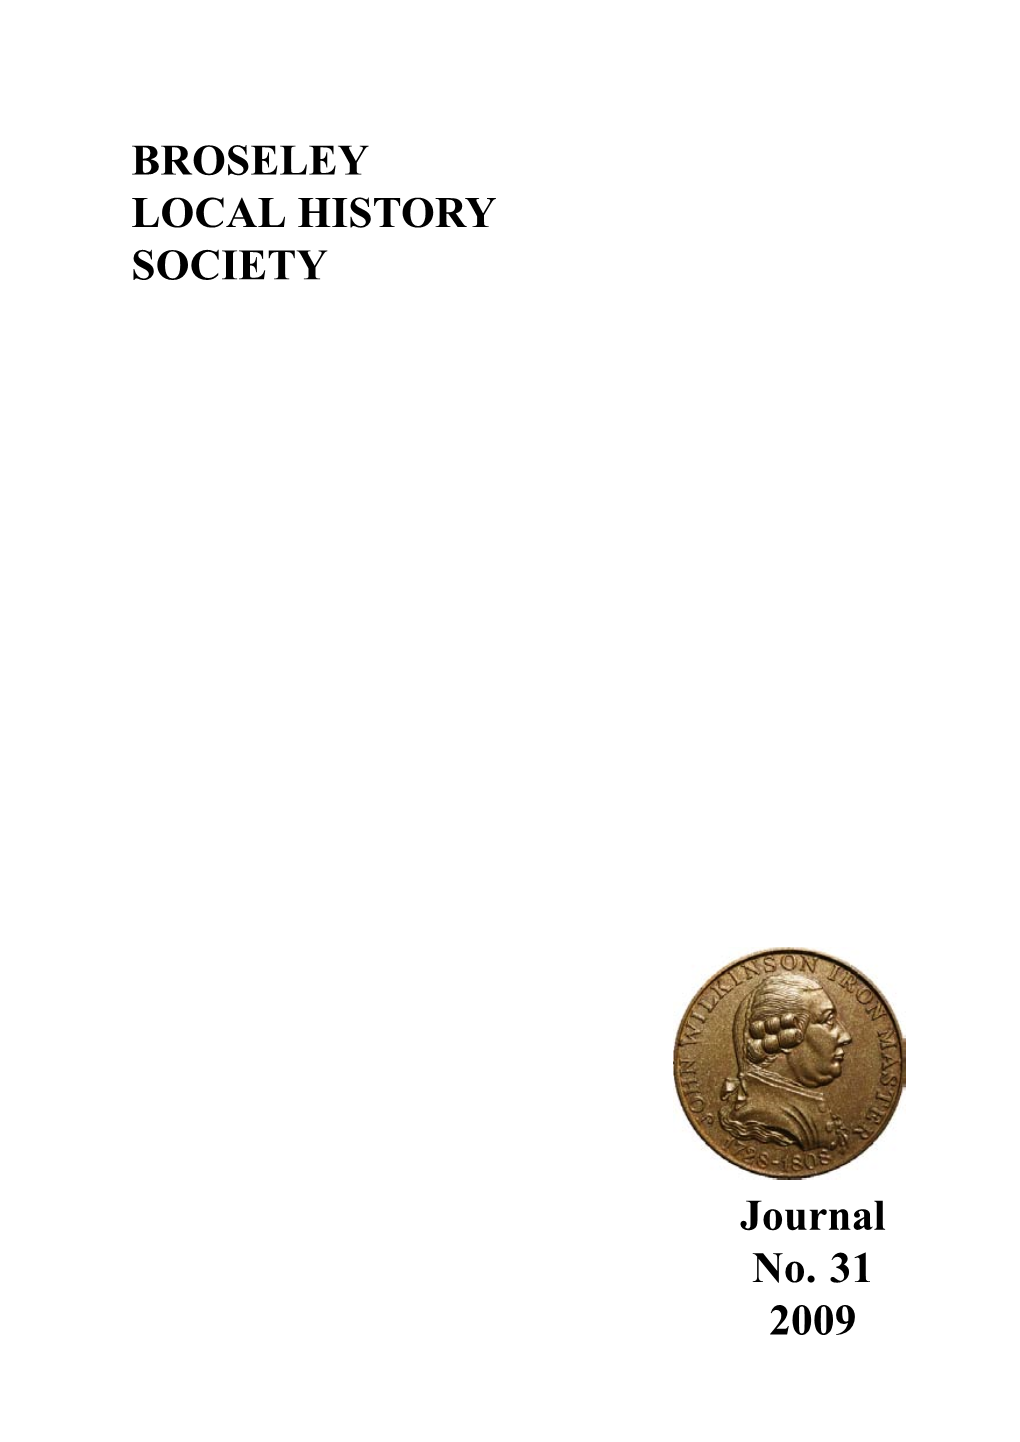 BROSELEY LOCAL HISTORY SOCIETY Journal No. 31 2009